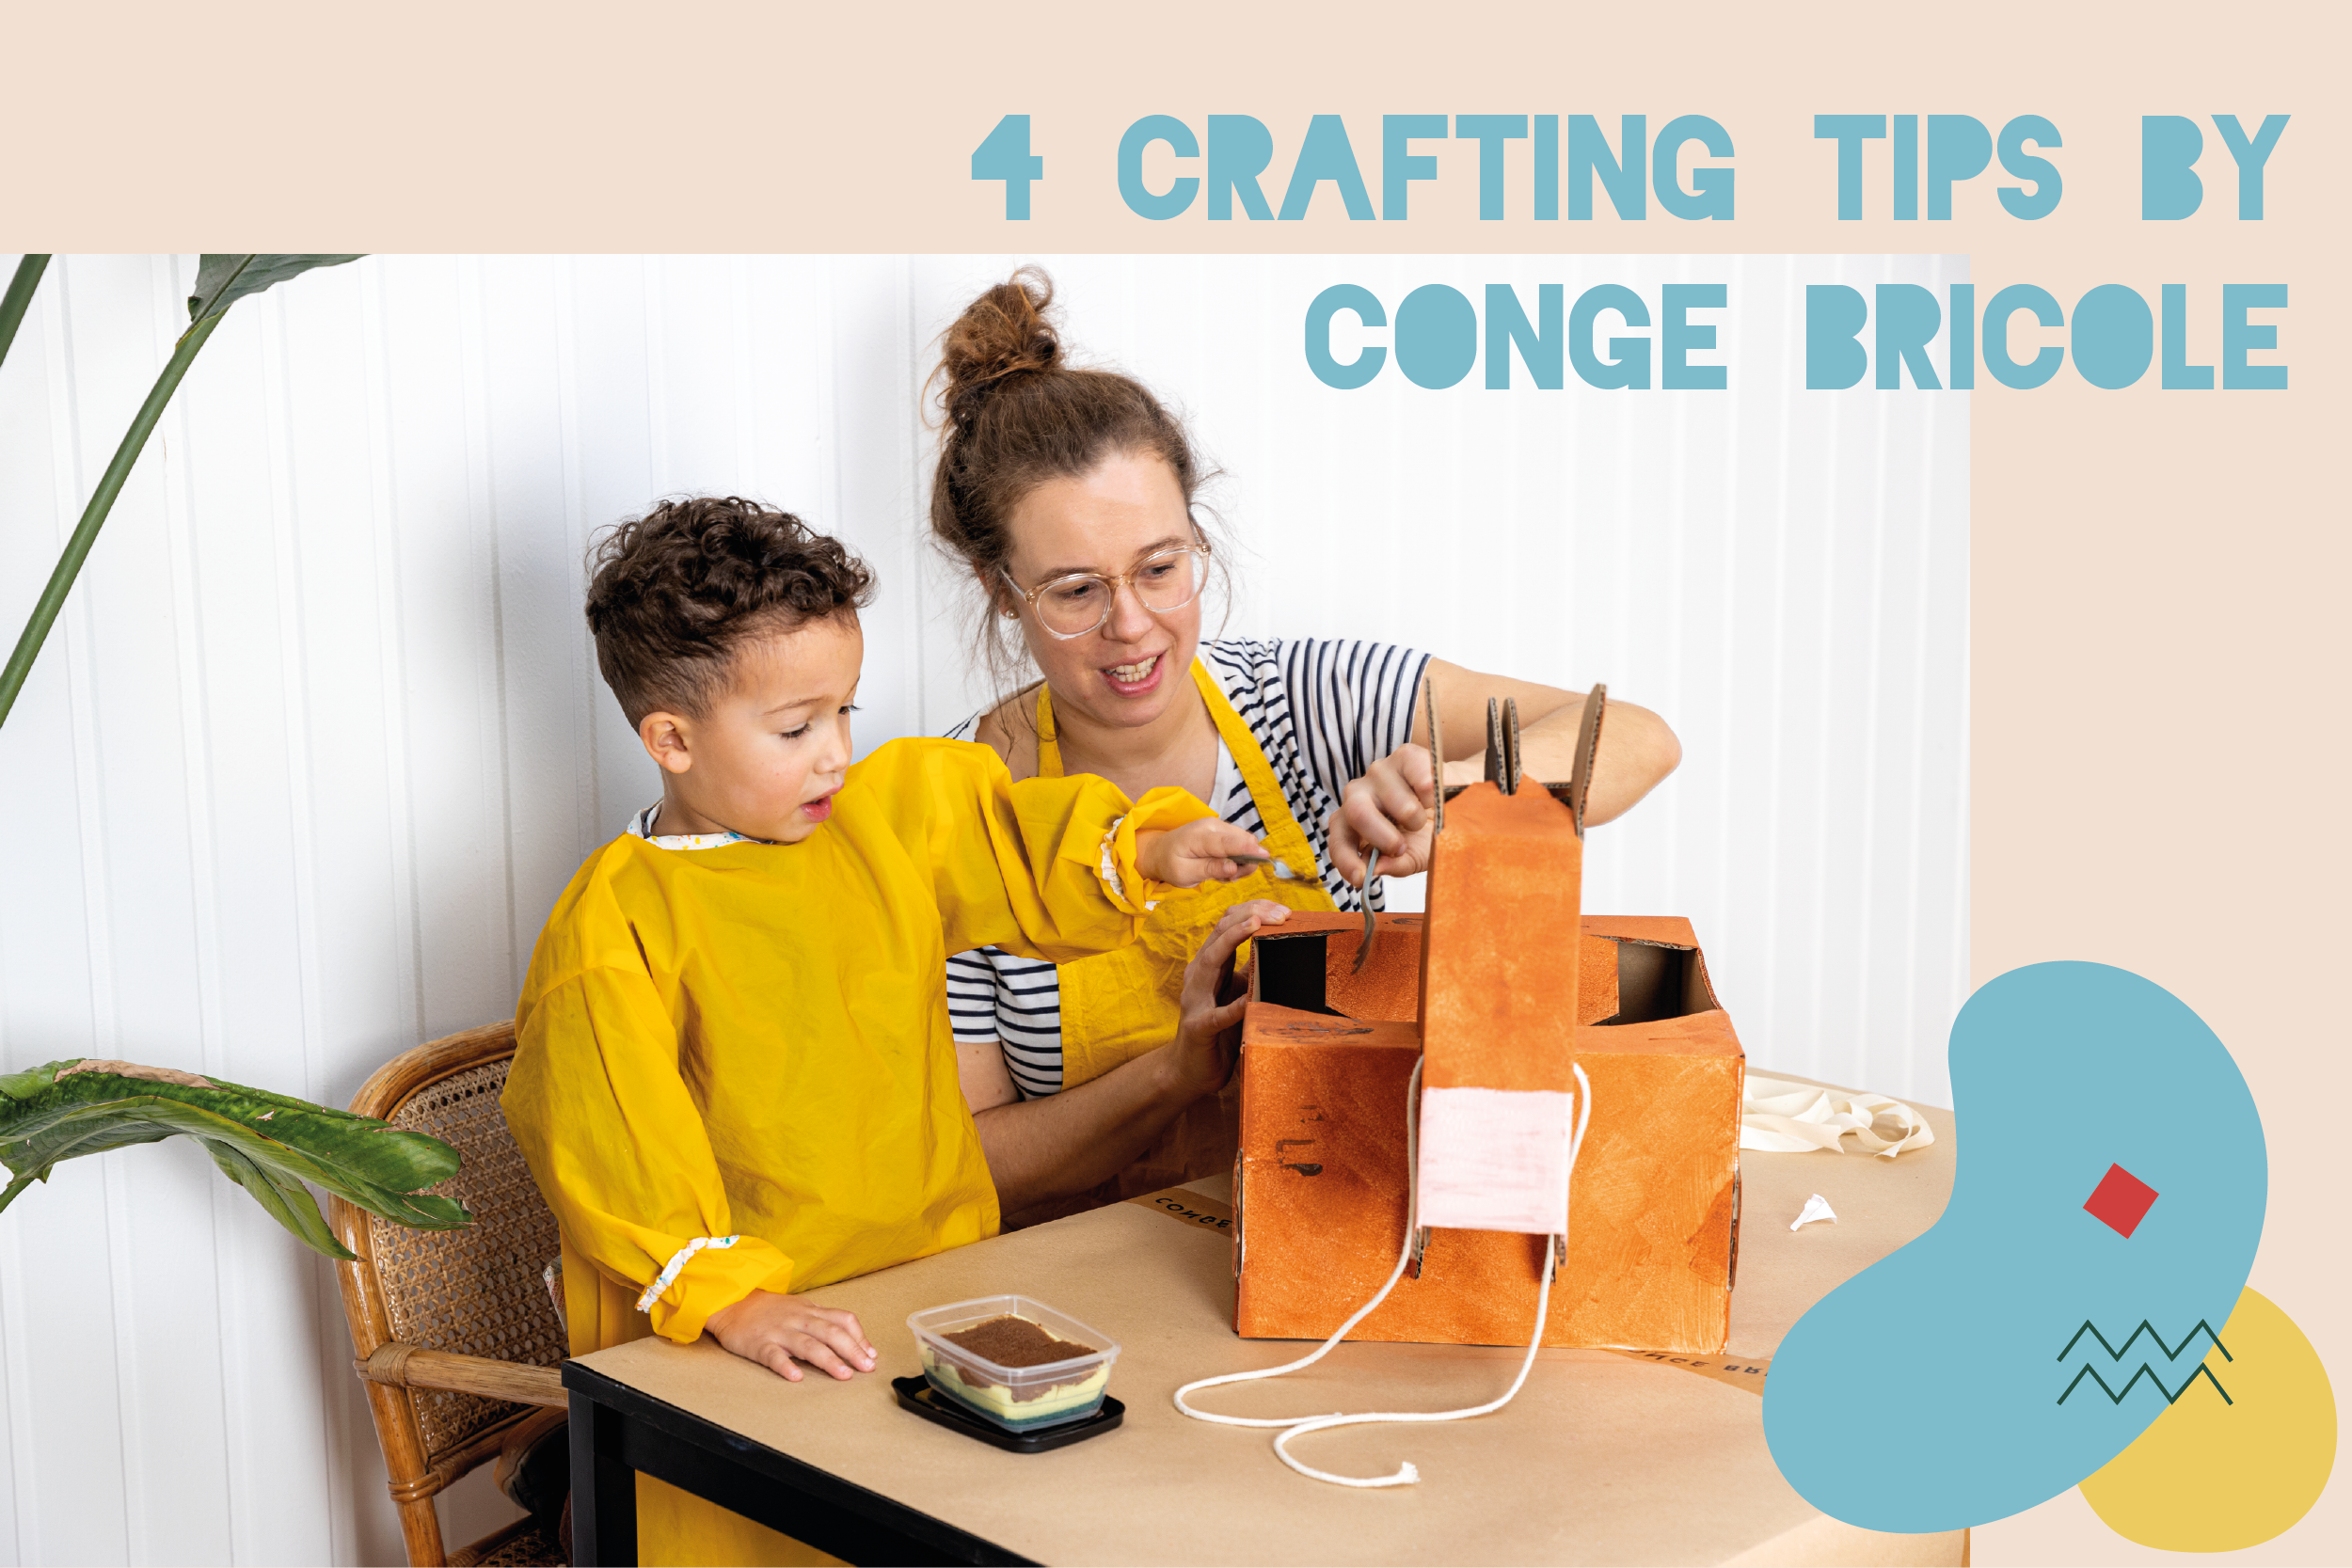 Crafting tips by Congé Bricolé